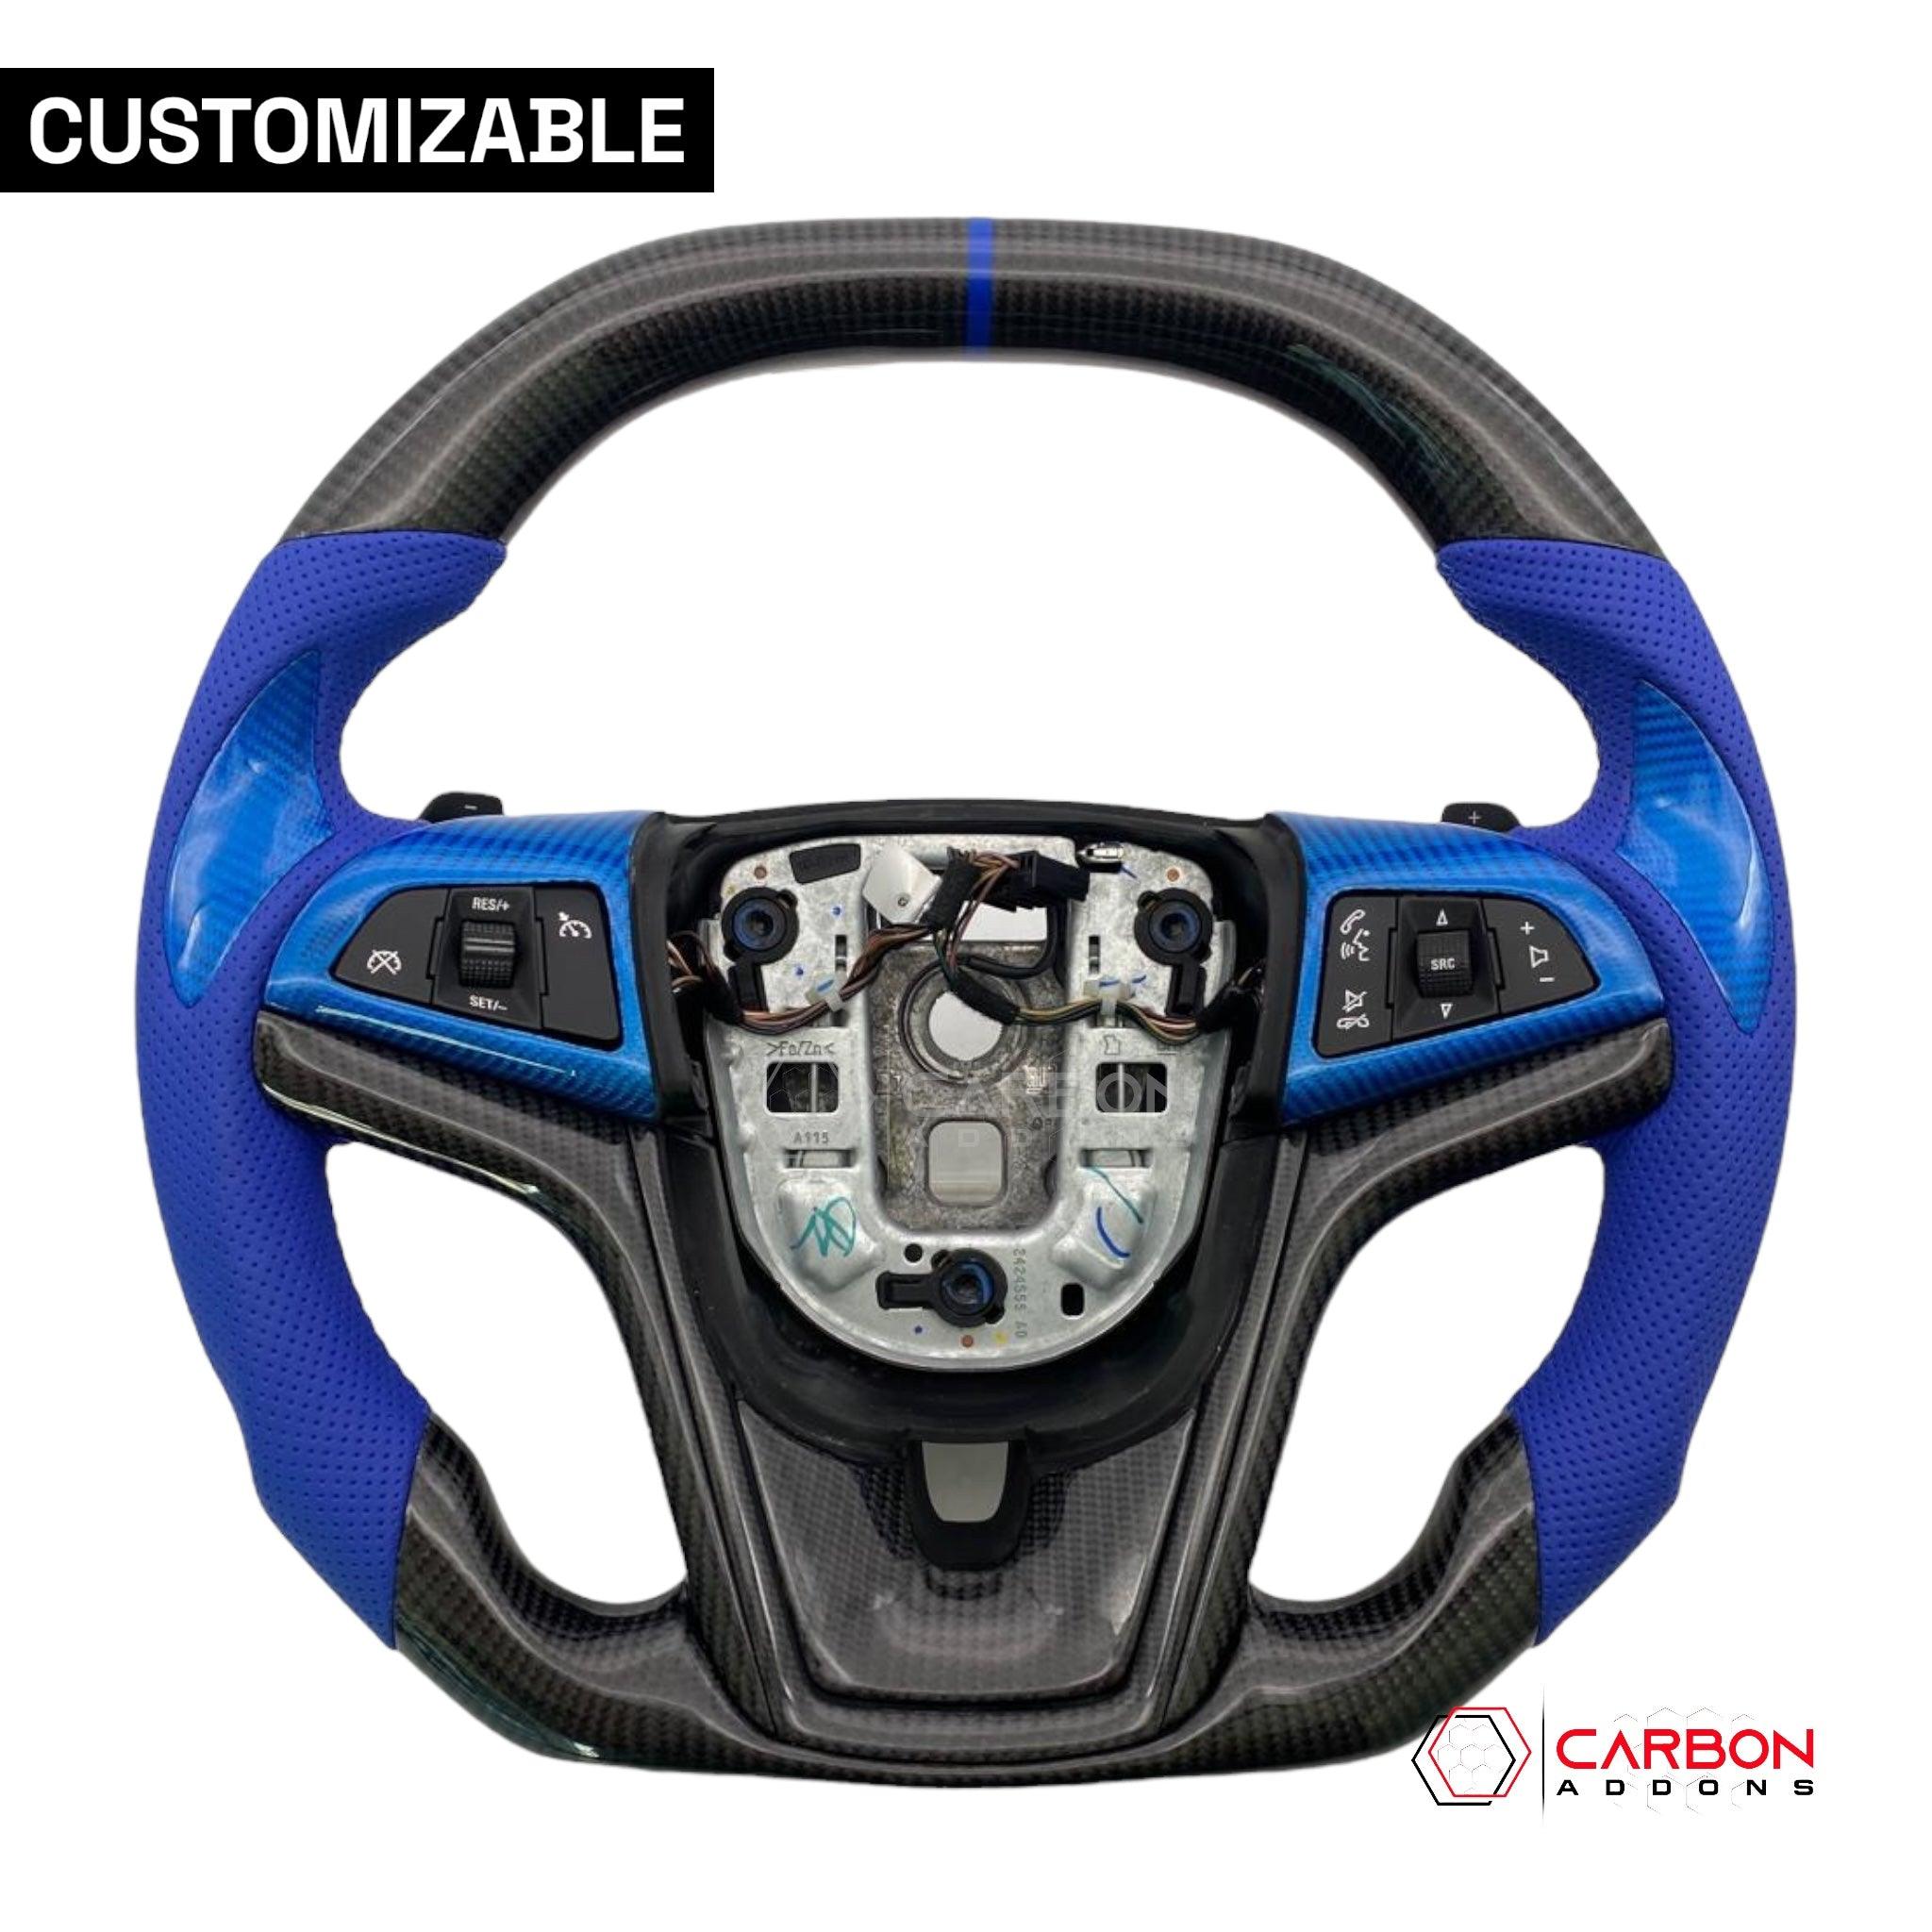 [Complete] Custom Carbon Fiber Steering Wheel For 2012-2015 Chevy Camaro - carbonaddons Carbon Fiber Parts, Accessories, Upgrades, Mods